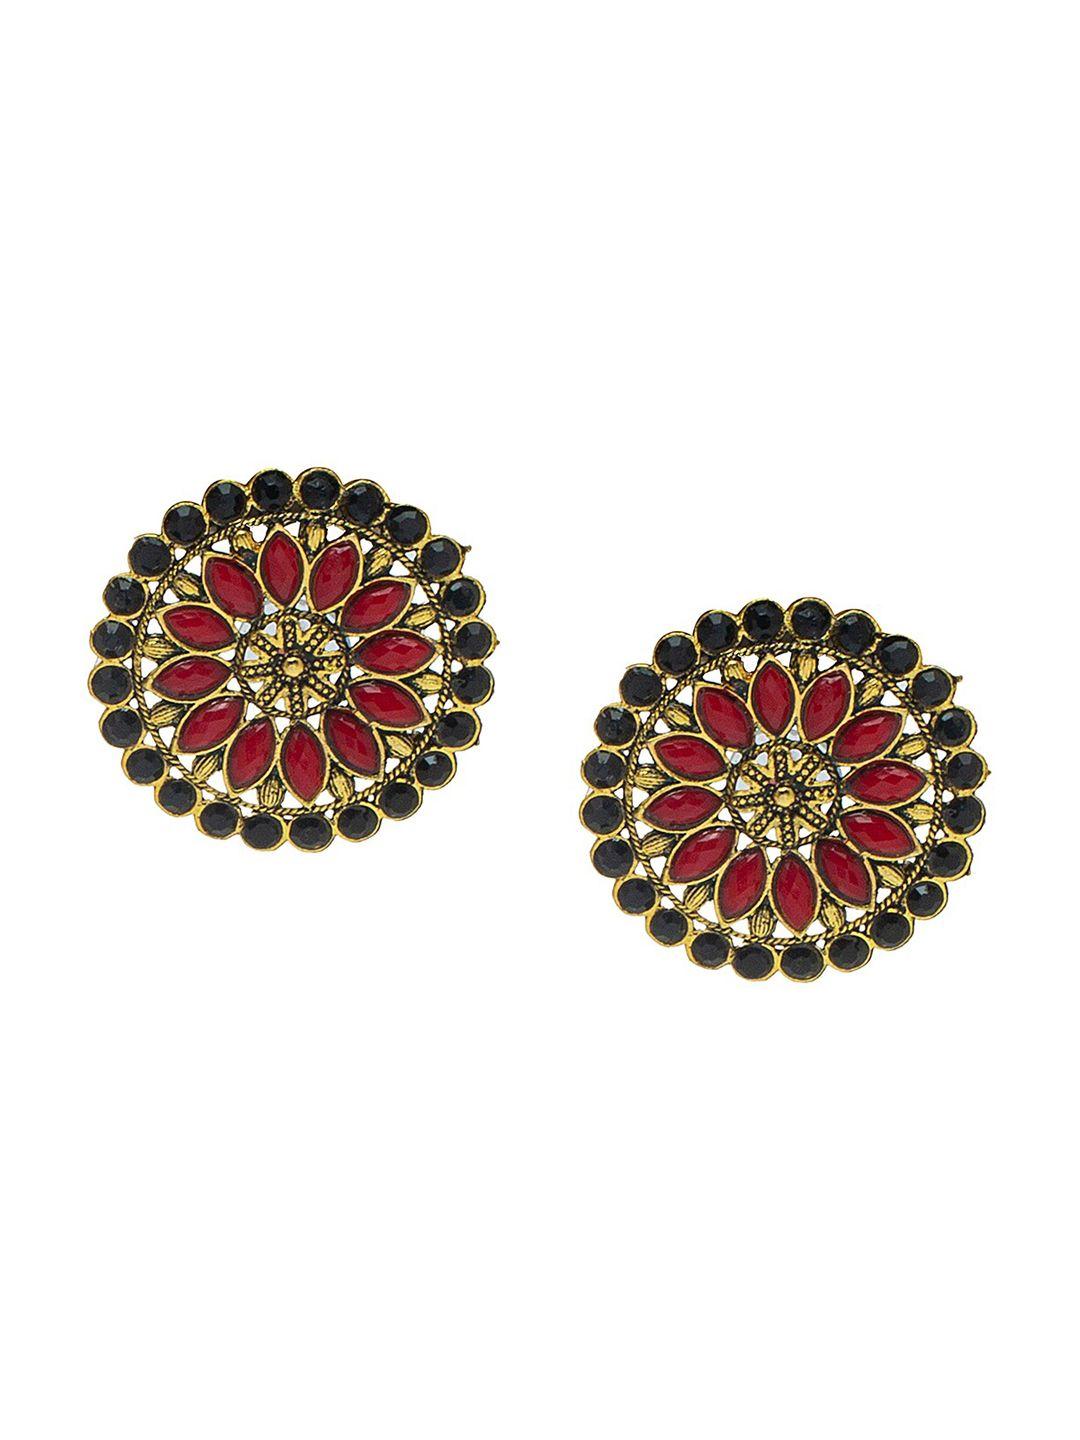 shining jewel - by shivansh gold-plated circular studs earrings